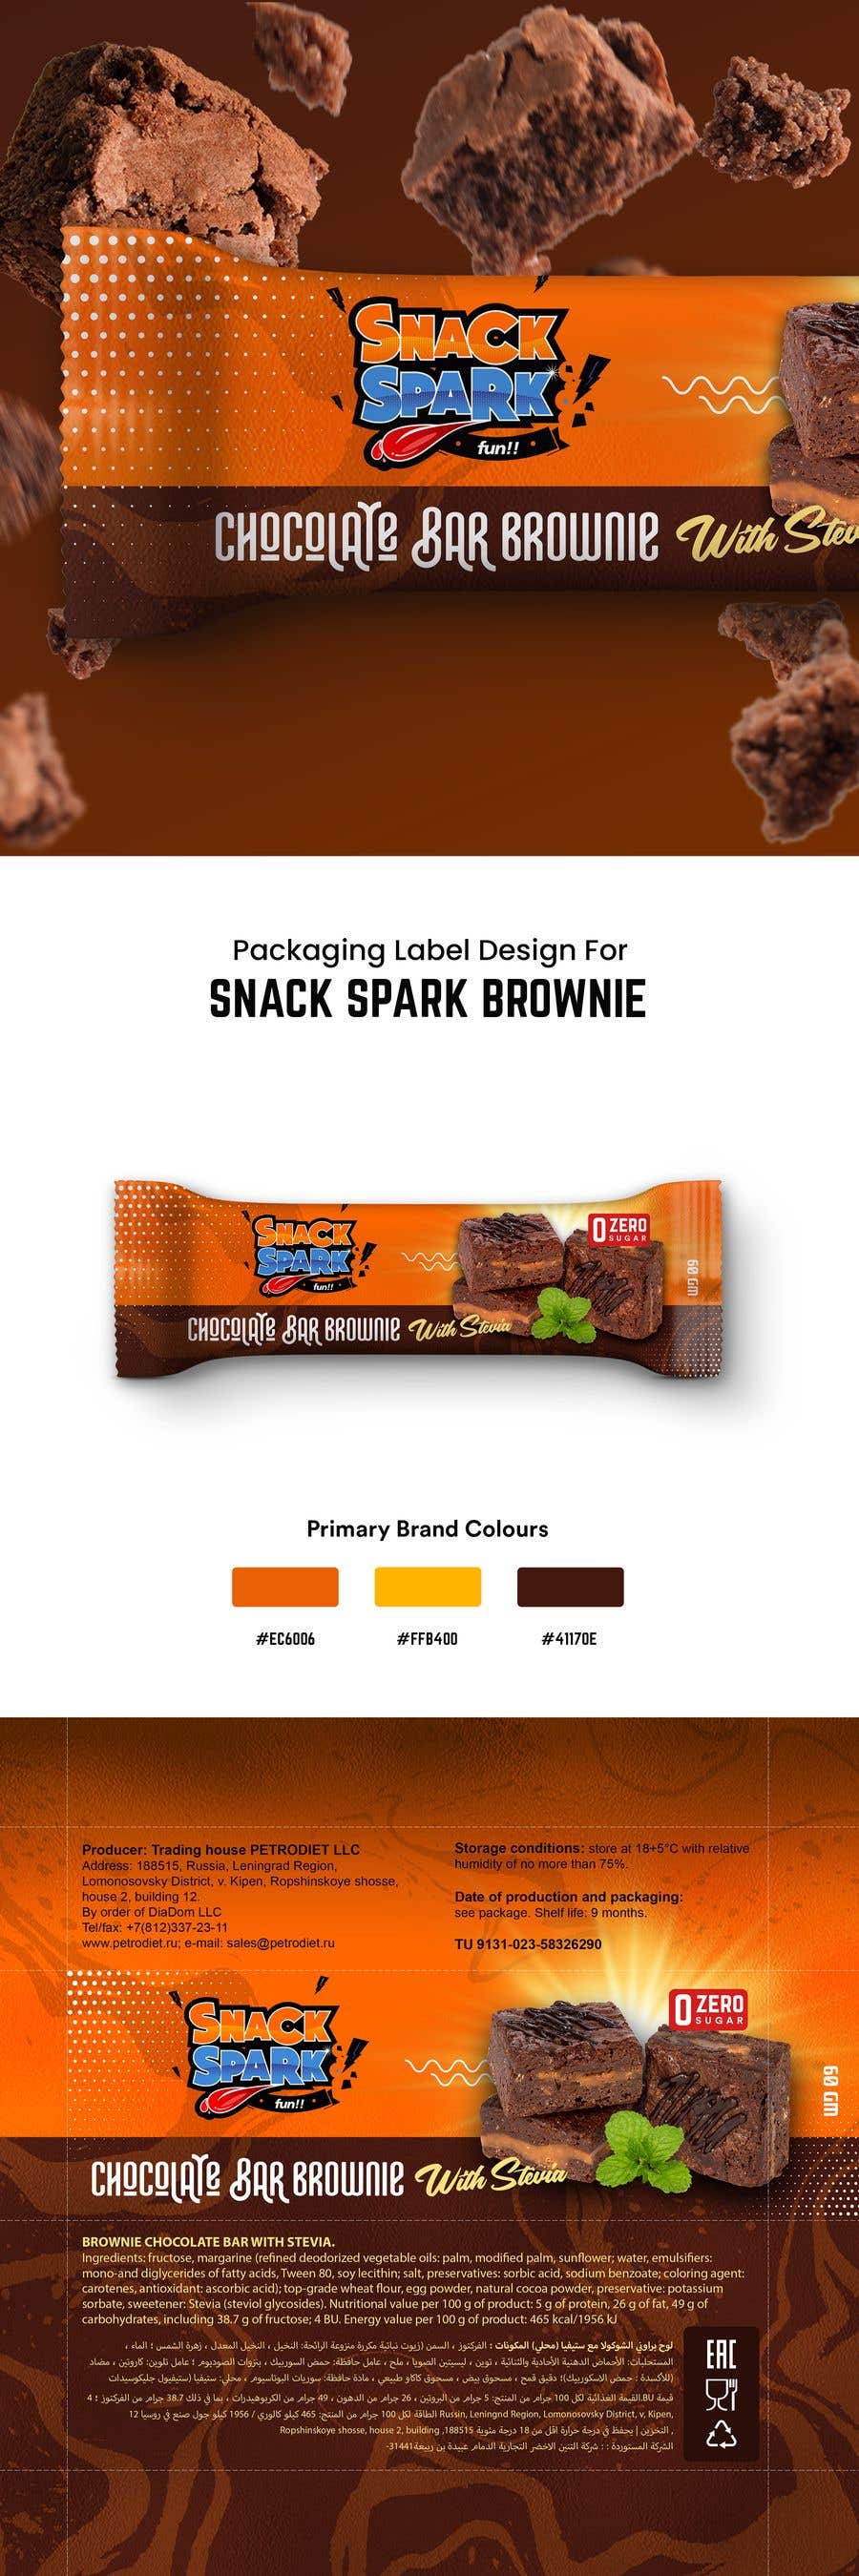 Kilpailutyö #392 kilpailussa                                                 spark snack brownie
                                            